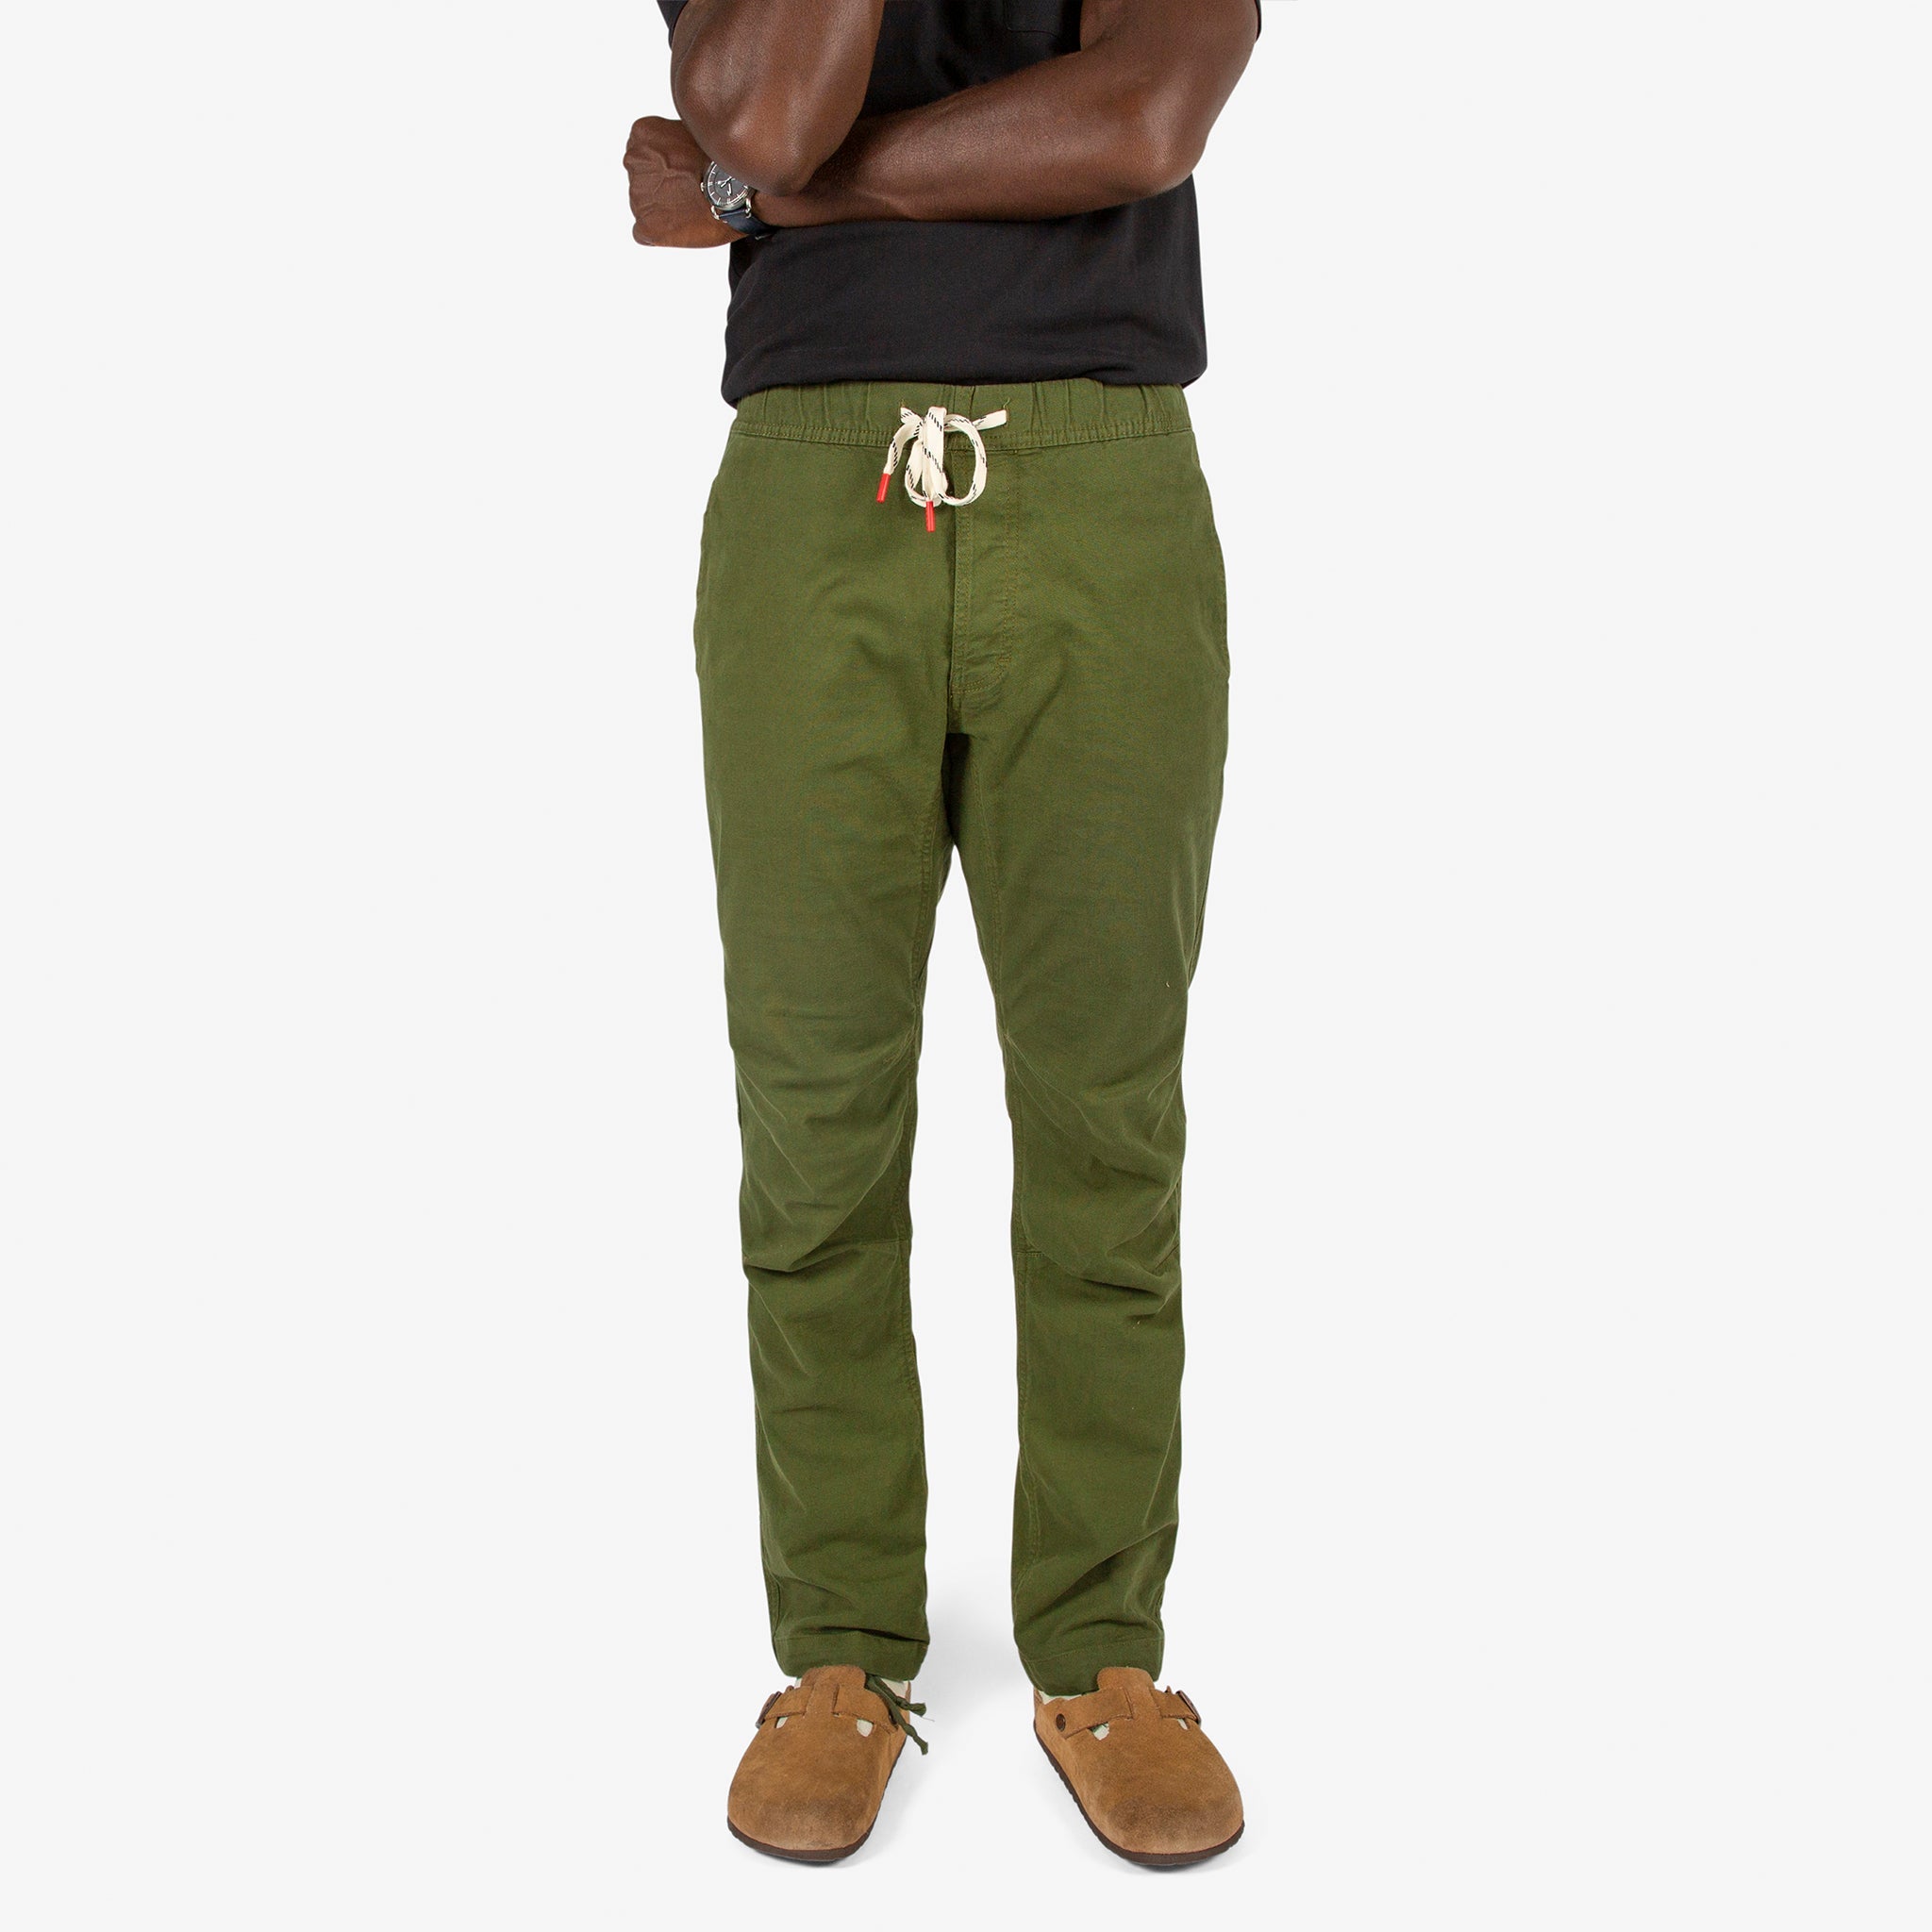 Close-up front model shot of Topo Designs Men's Dirt Shirt & Pants in "Olive" green.